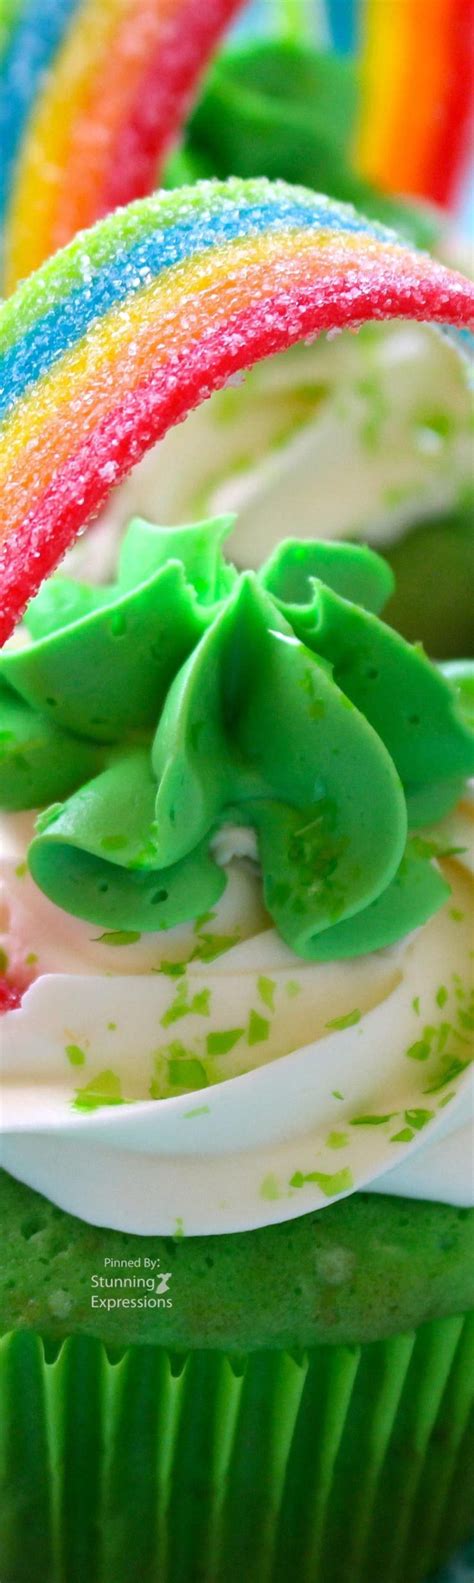 St Patricks Day Rainbow Cupcakes Stunning Expressions